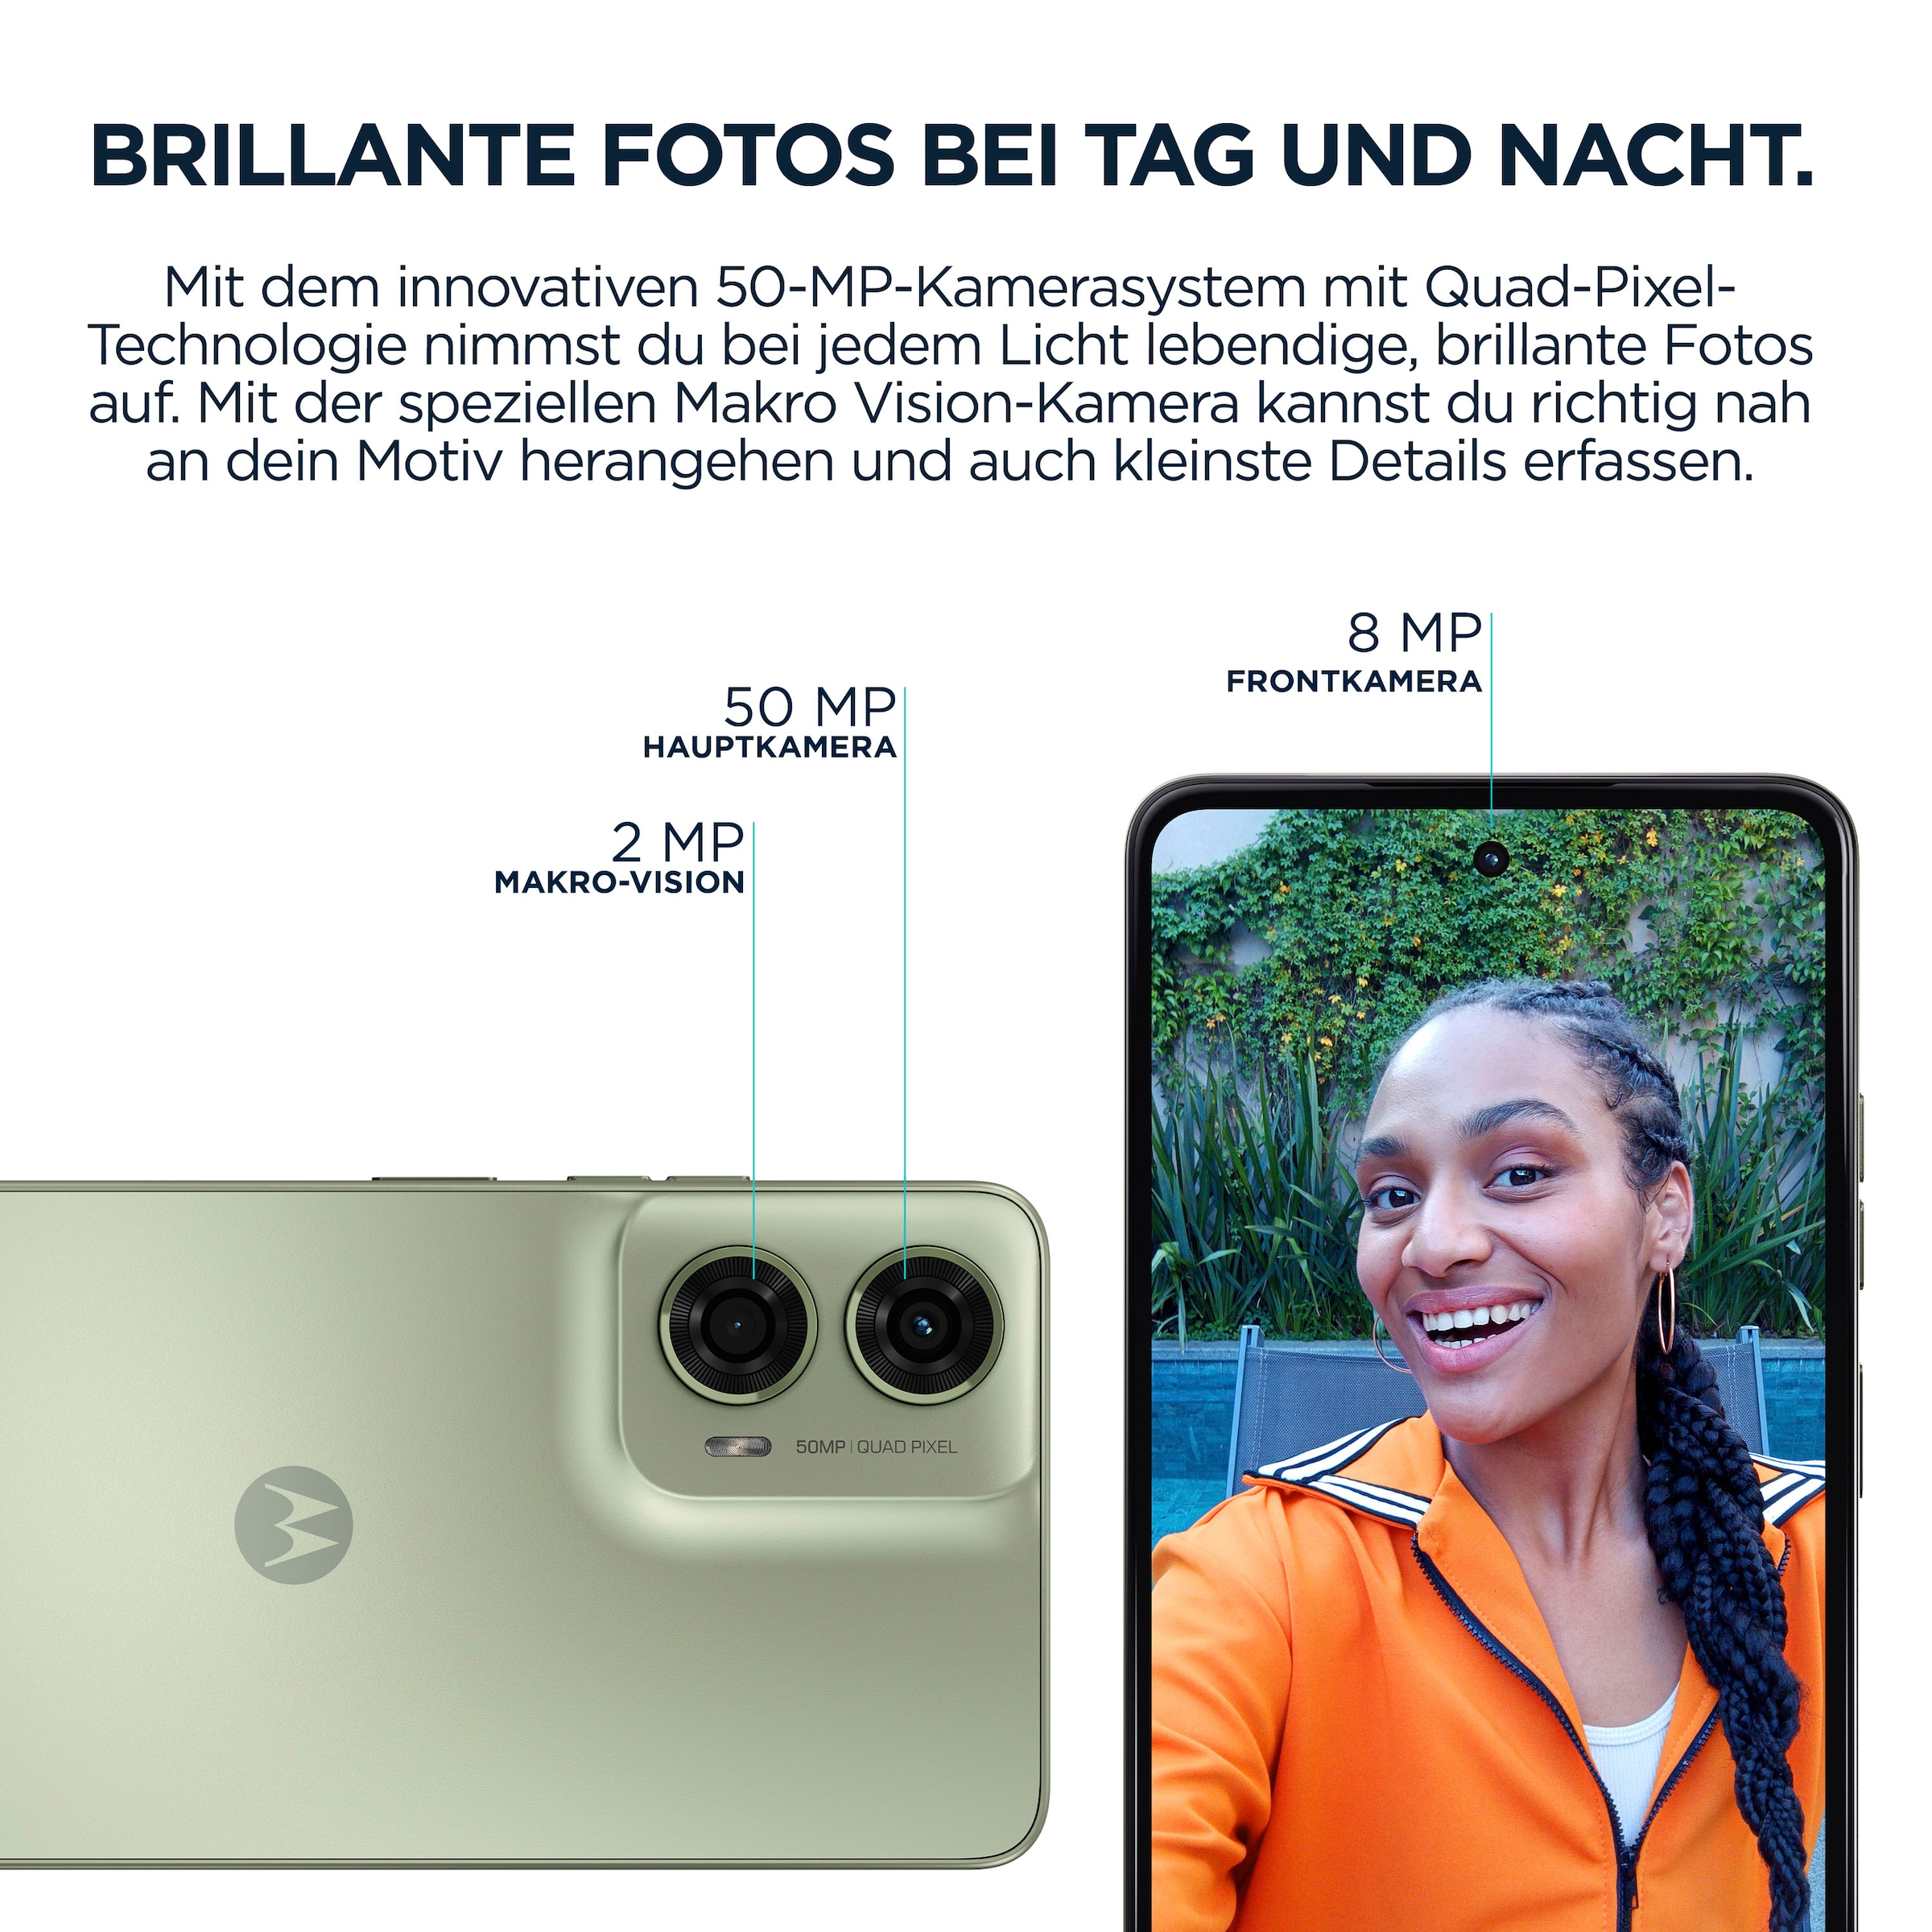 Motorola Smartphone »Moto G24«, Seafoam Green, 16,66 cm/6,56 Zoll, 128 GB Speicherplatz, 50 MP Kamera